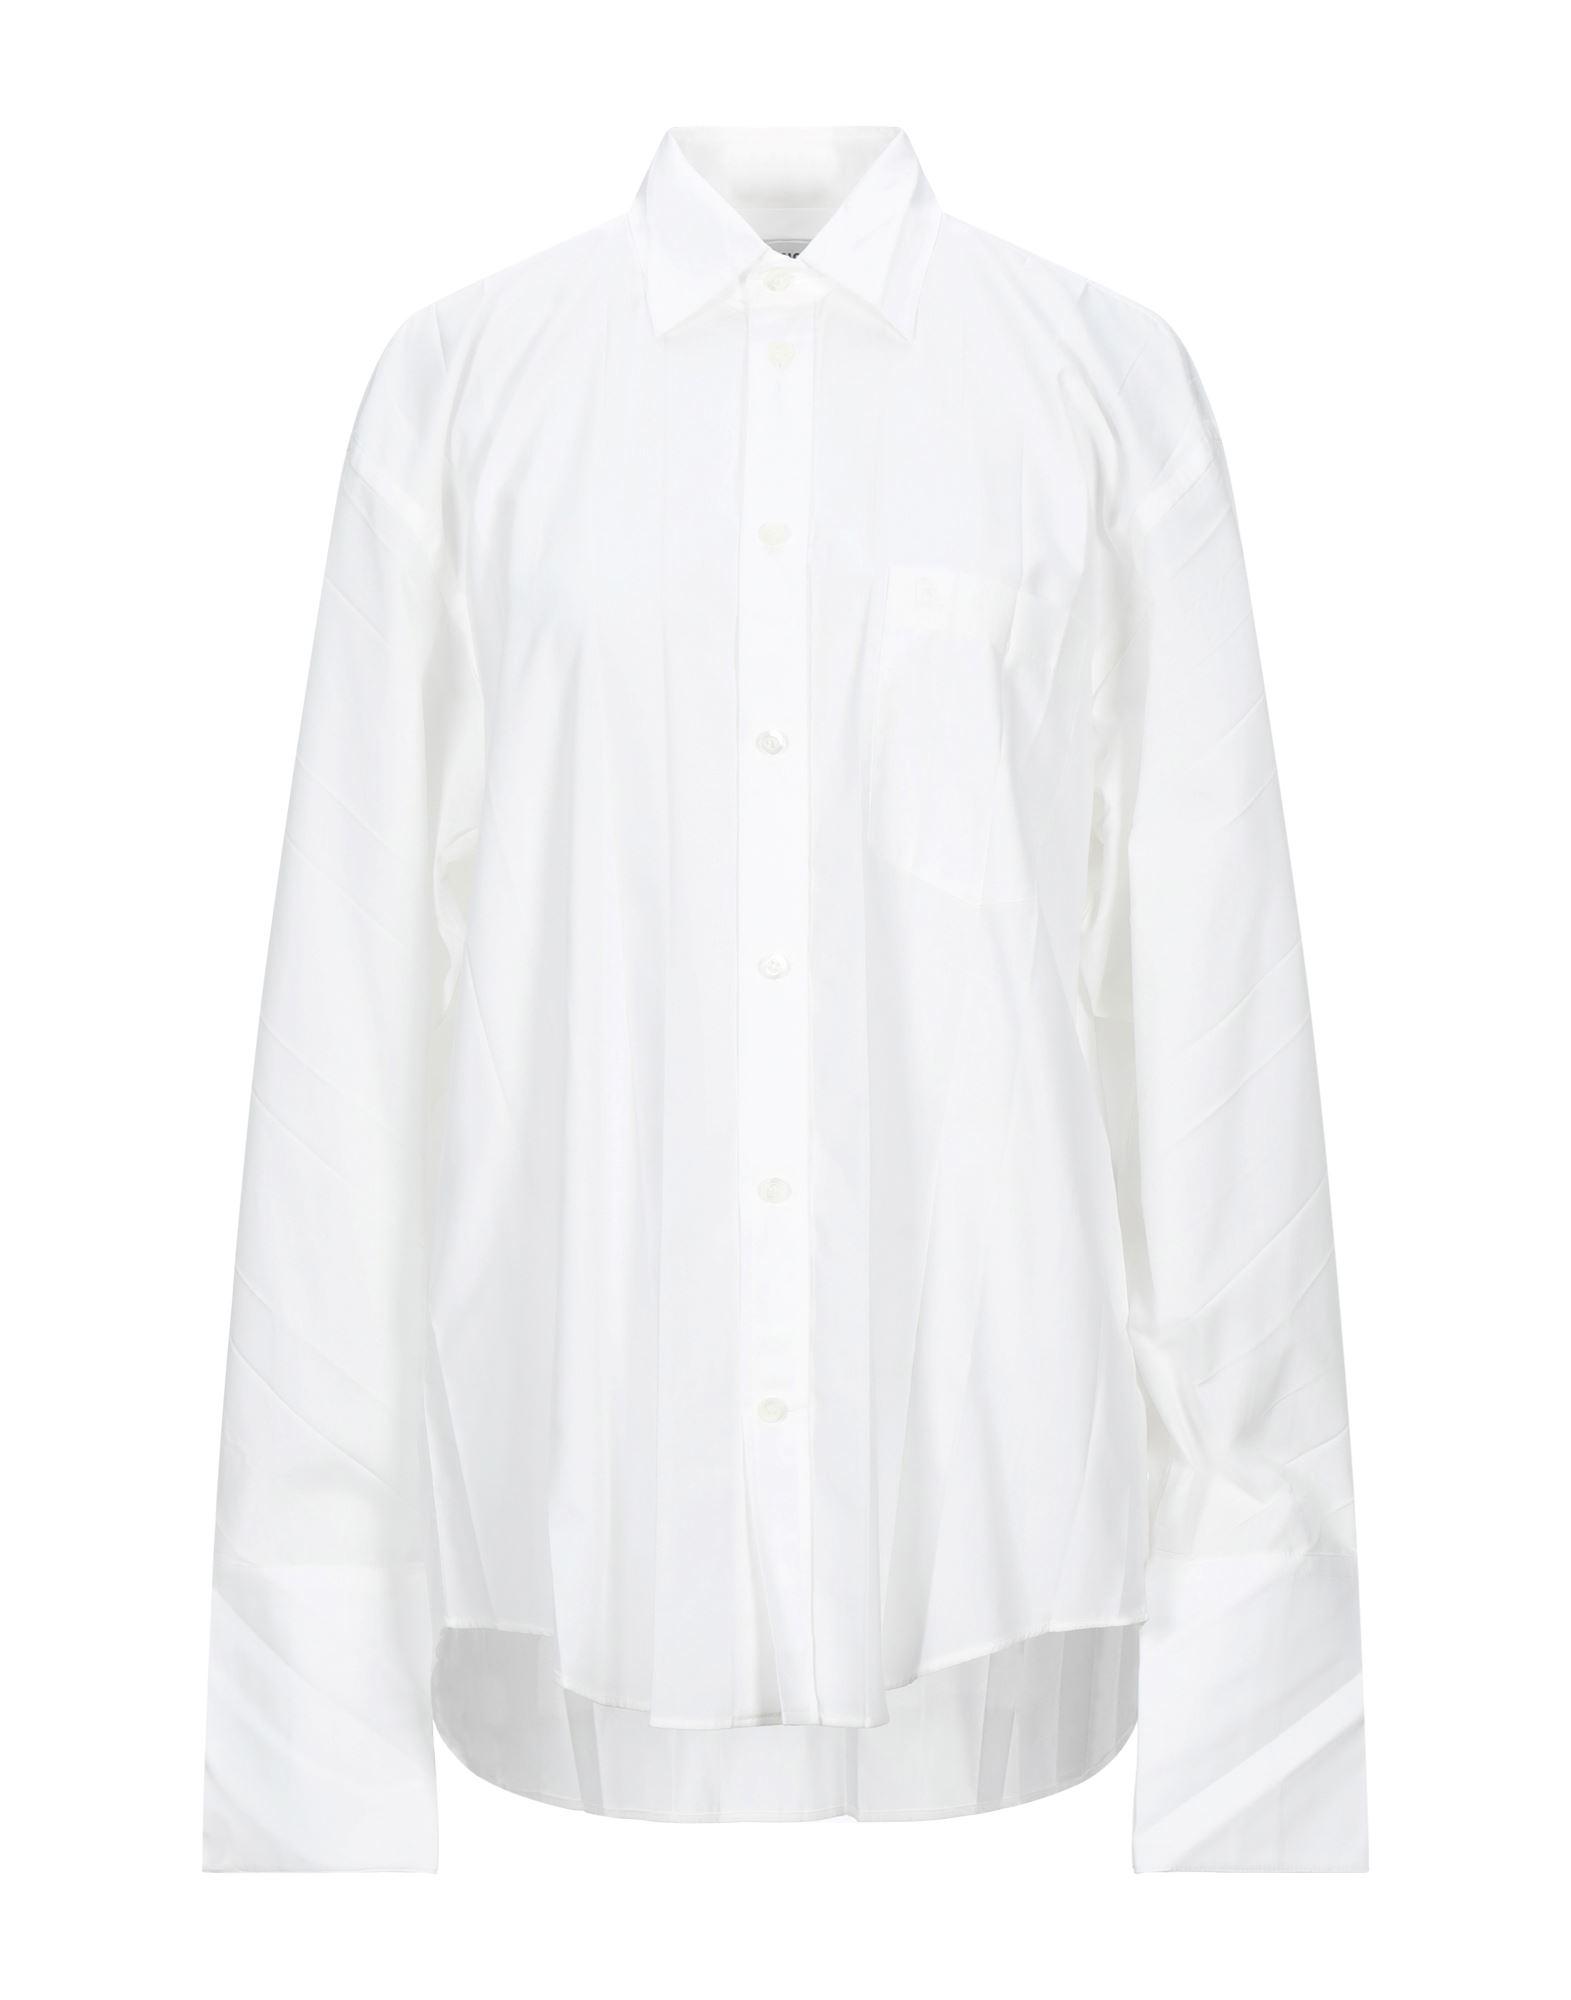 Balenciaga Synthetic Shirt in White - Lyst